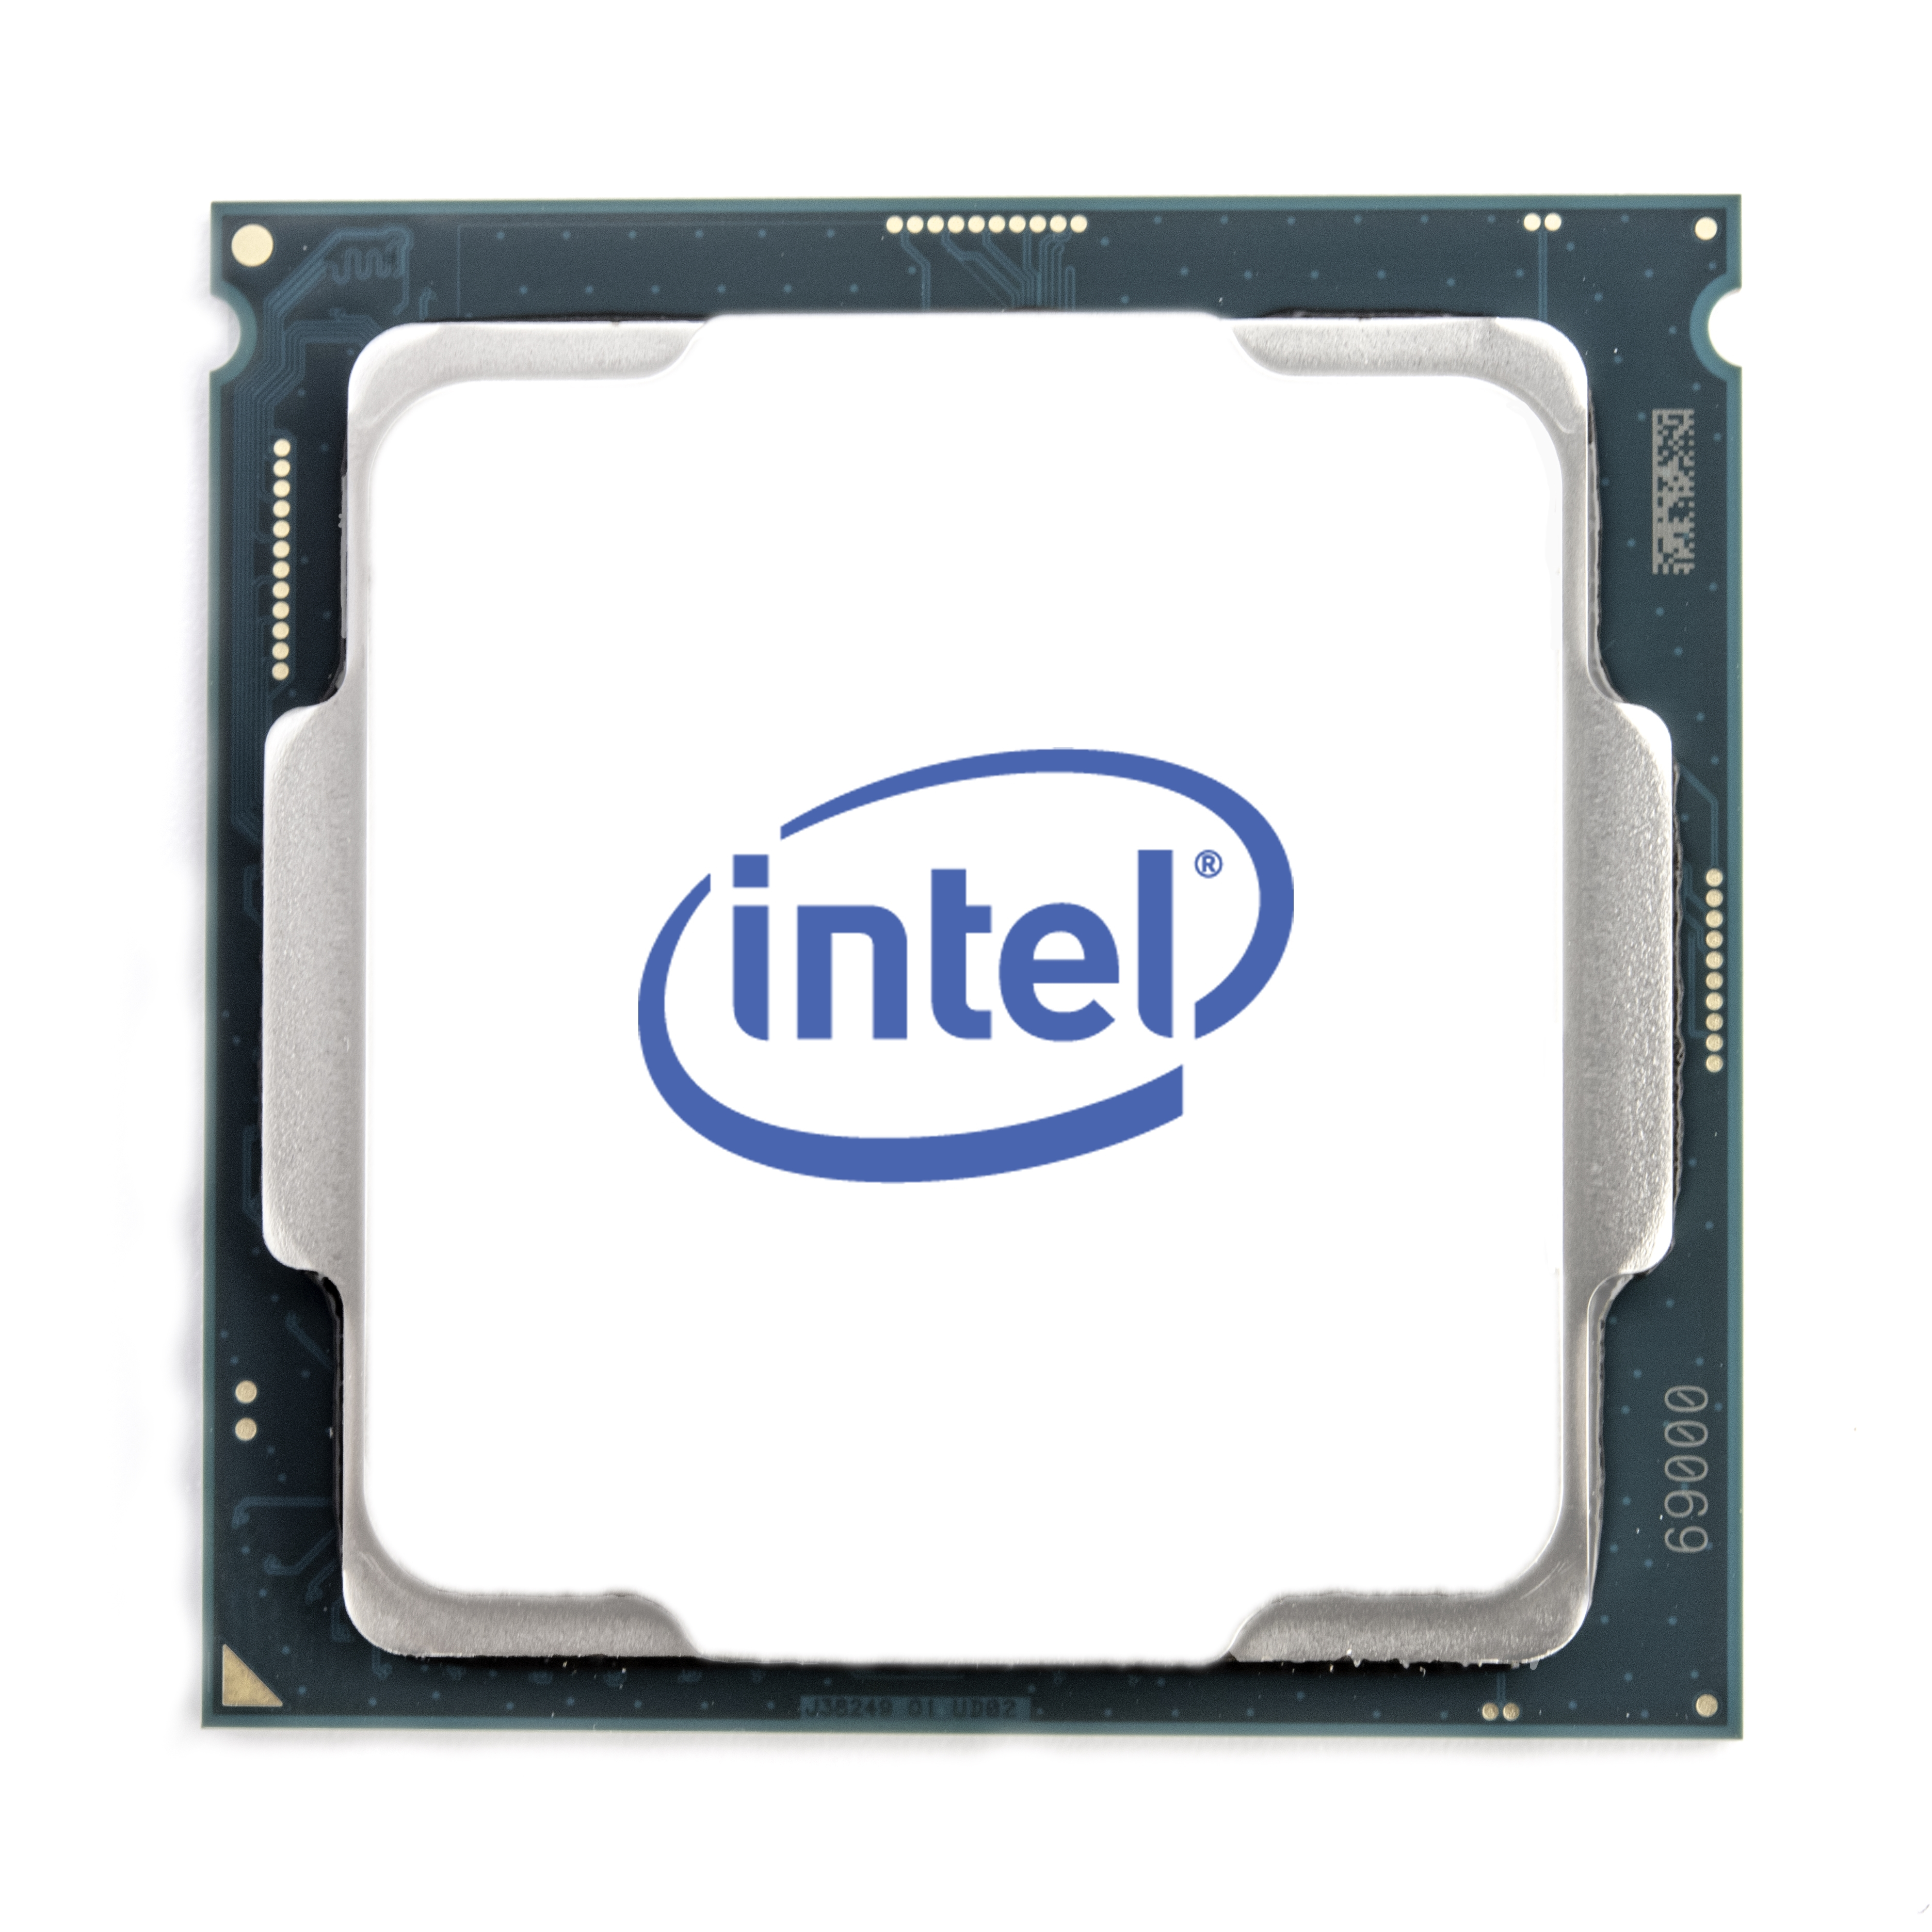 Intel Xeon 6240